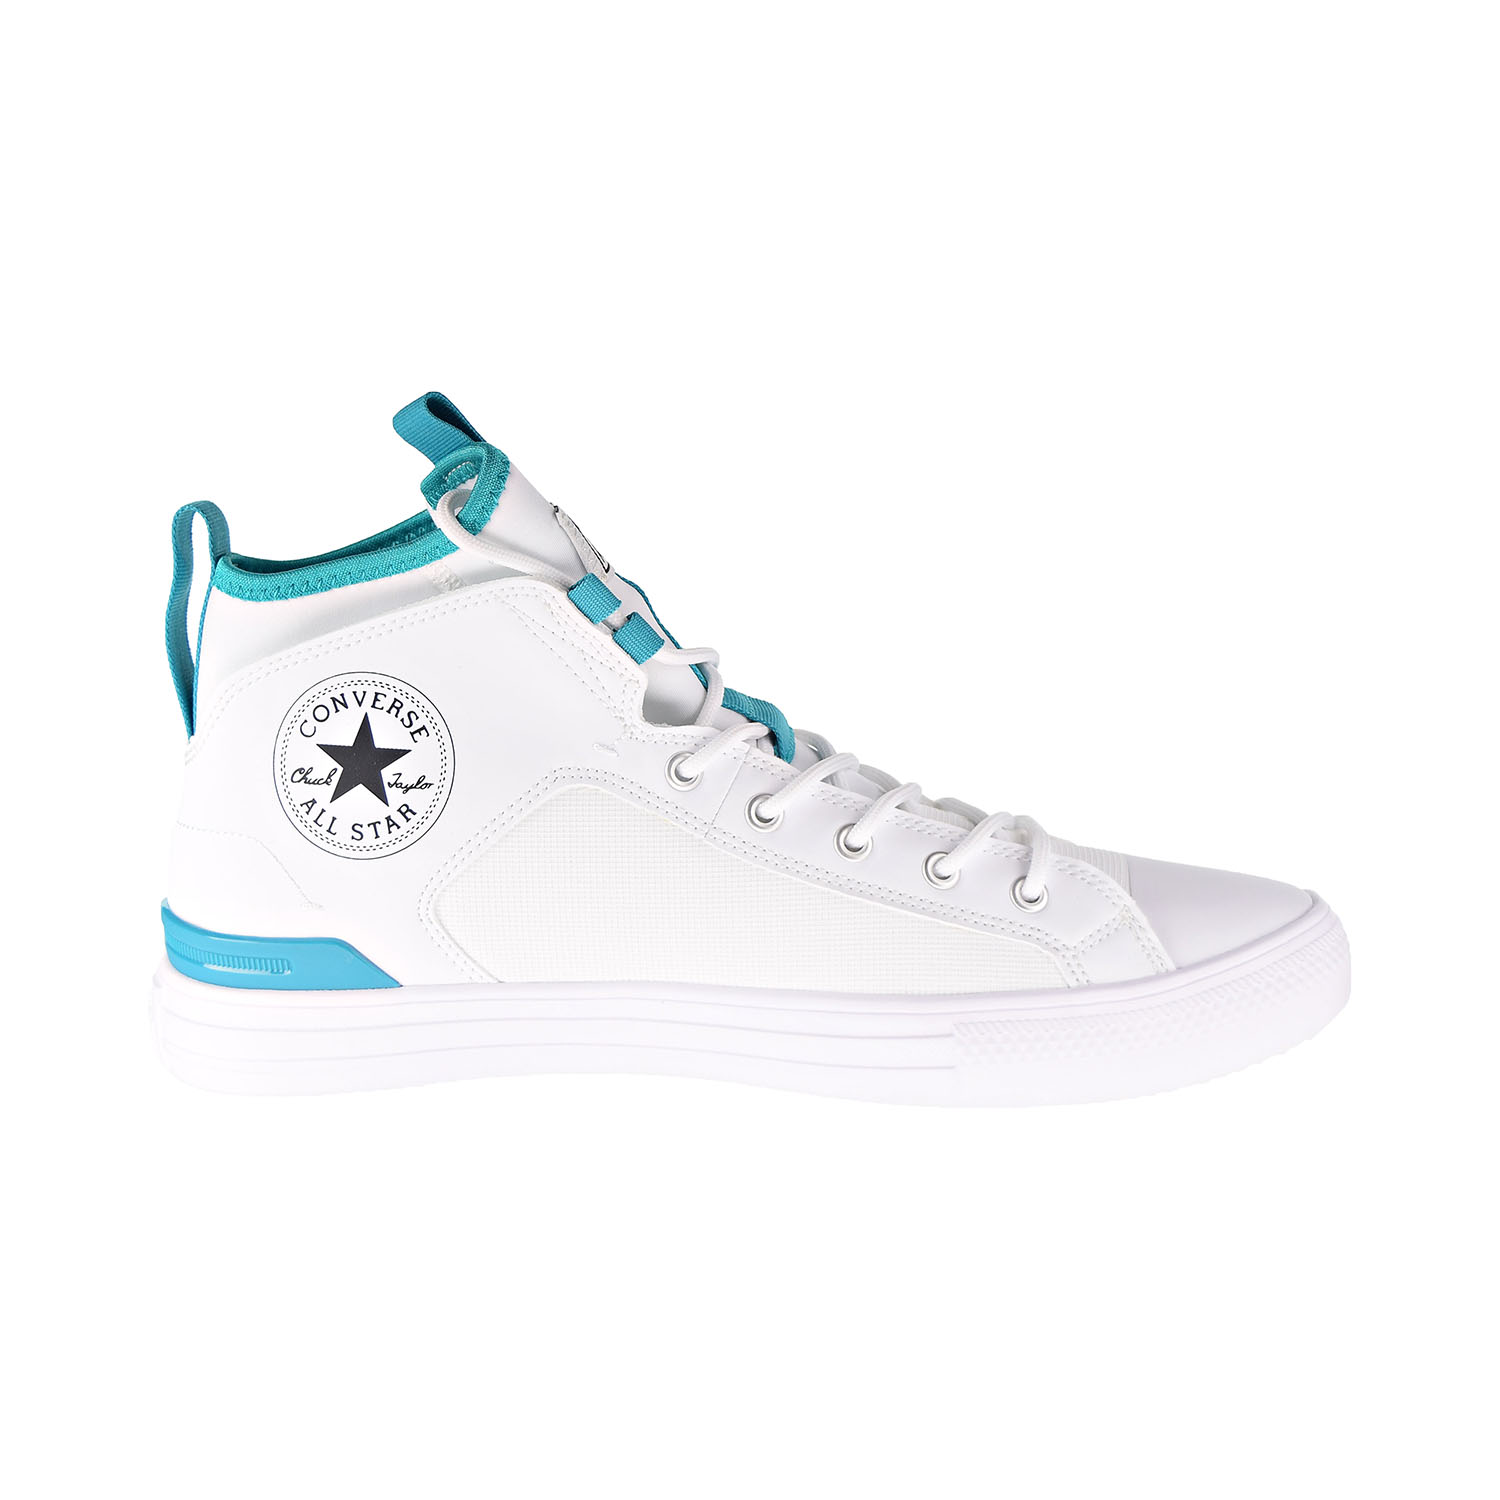 Shoes White-Turbo Green 165342C 